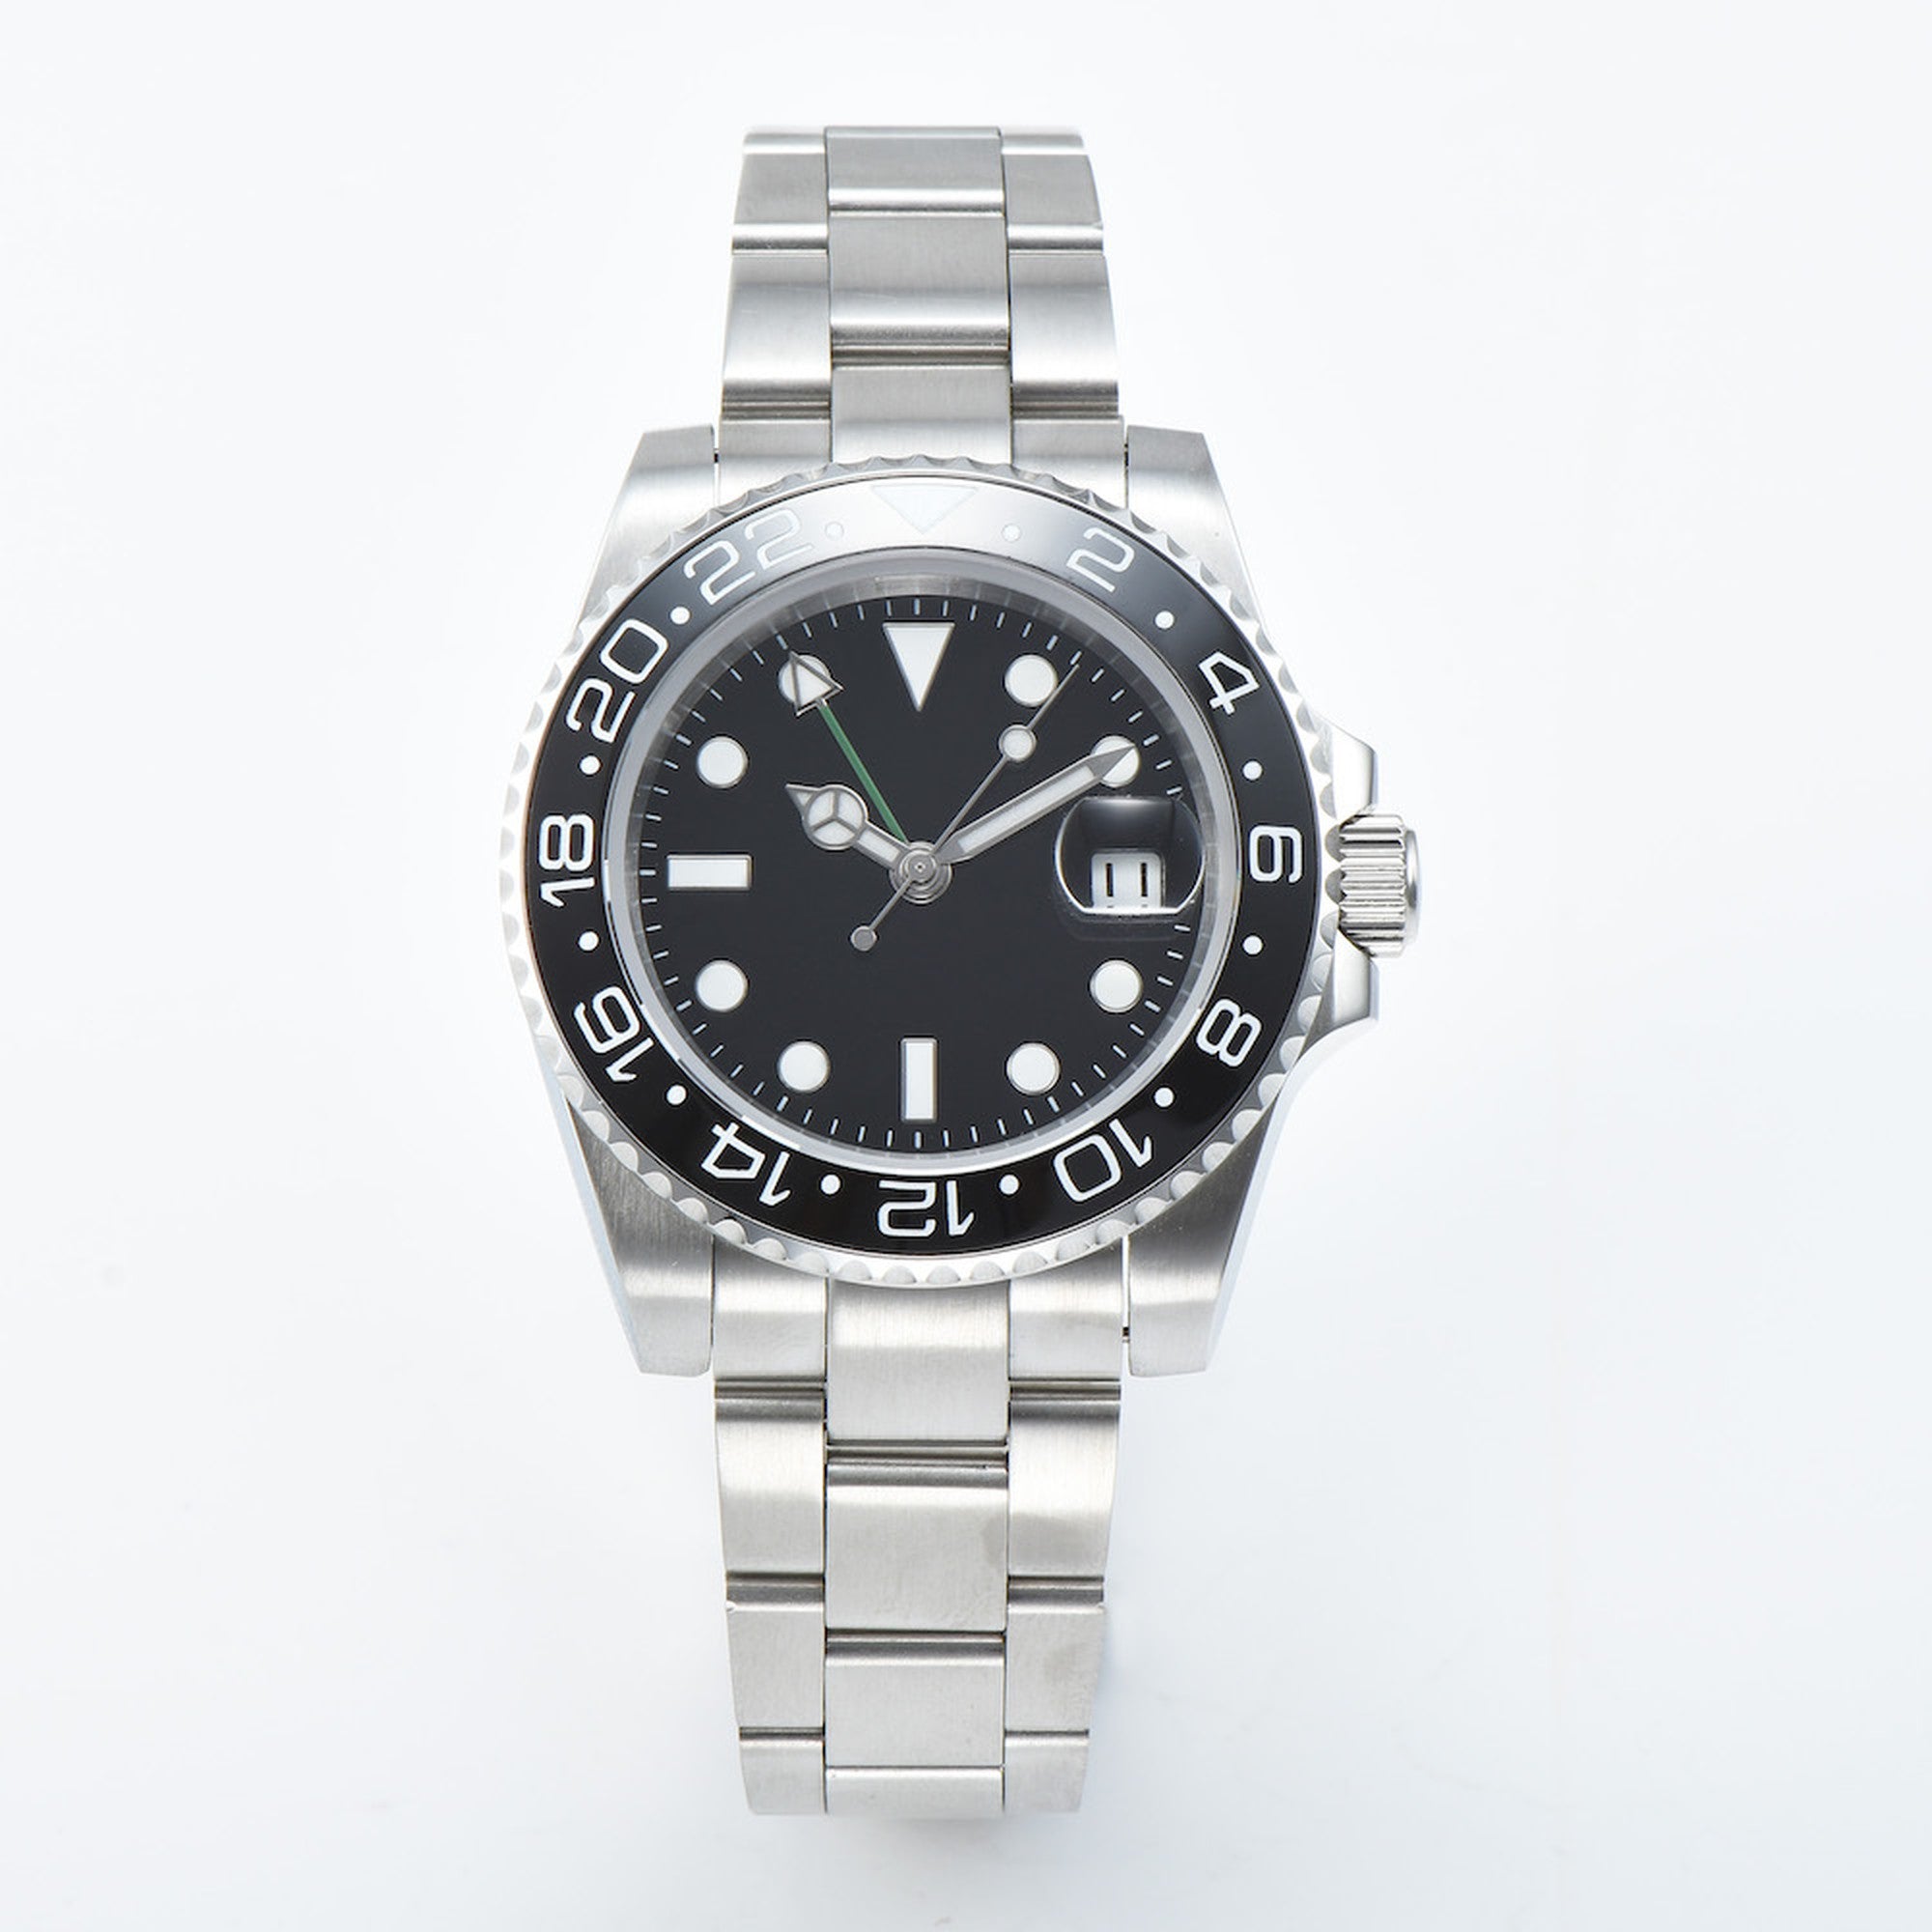 Men's self-winding watch / high quality movement GMT 40mm black / suit, popular luxury brand / waterproof / fashion